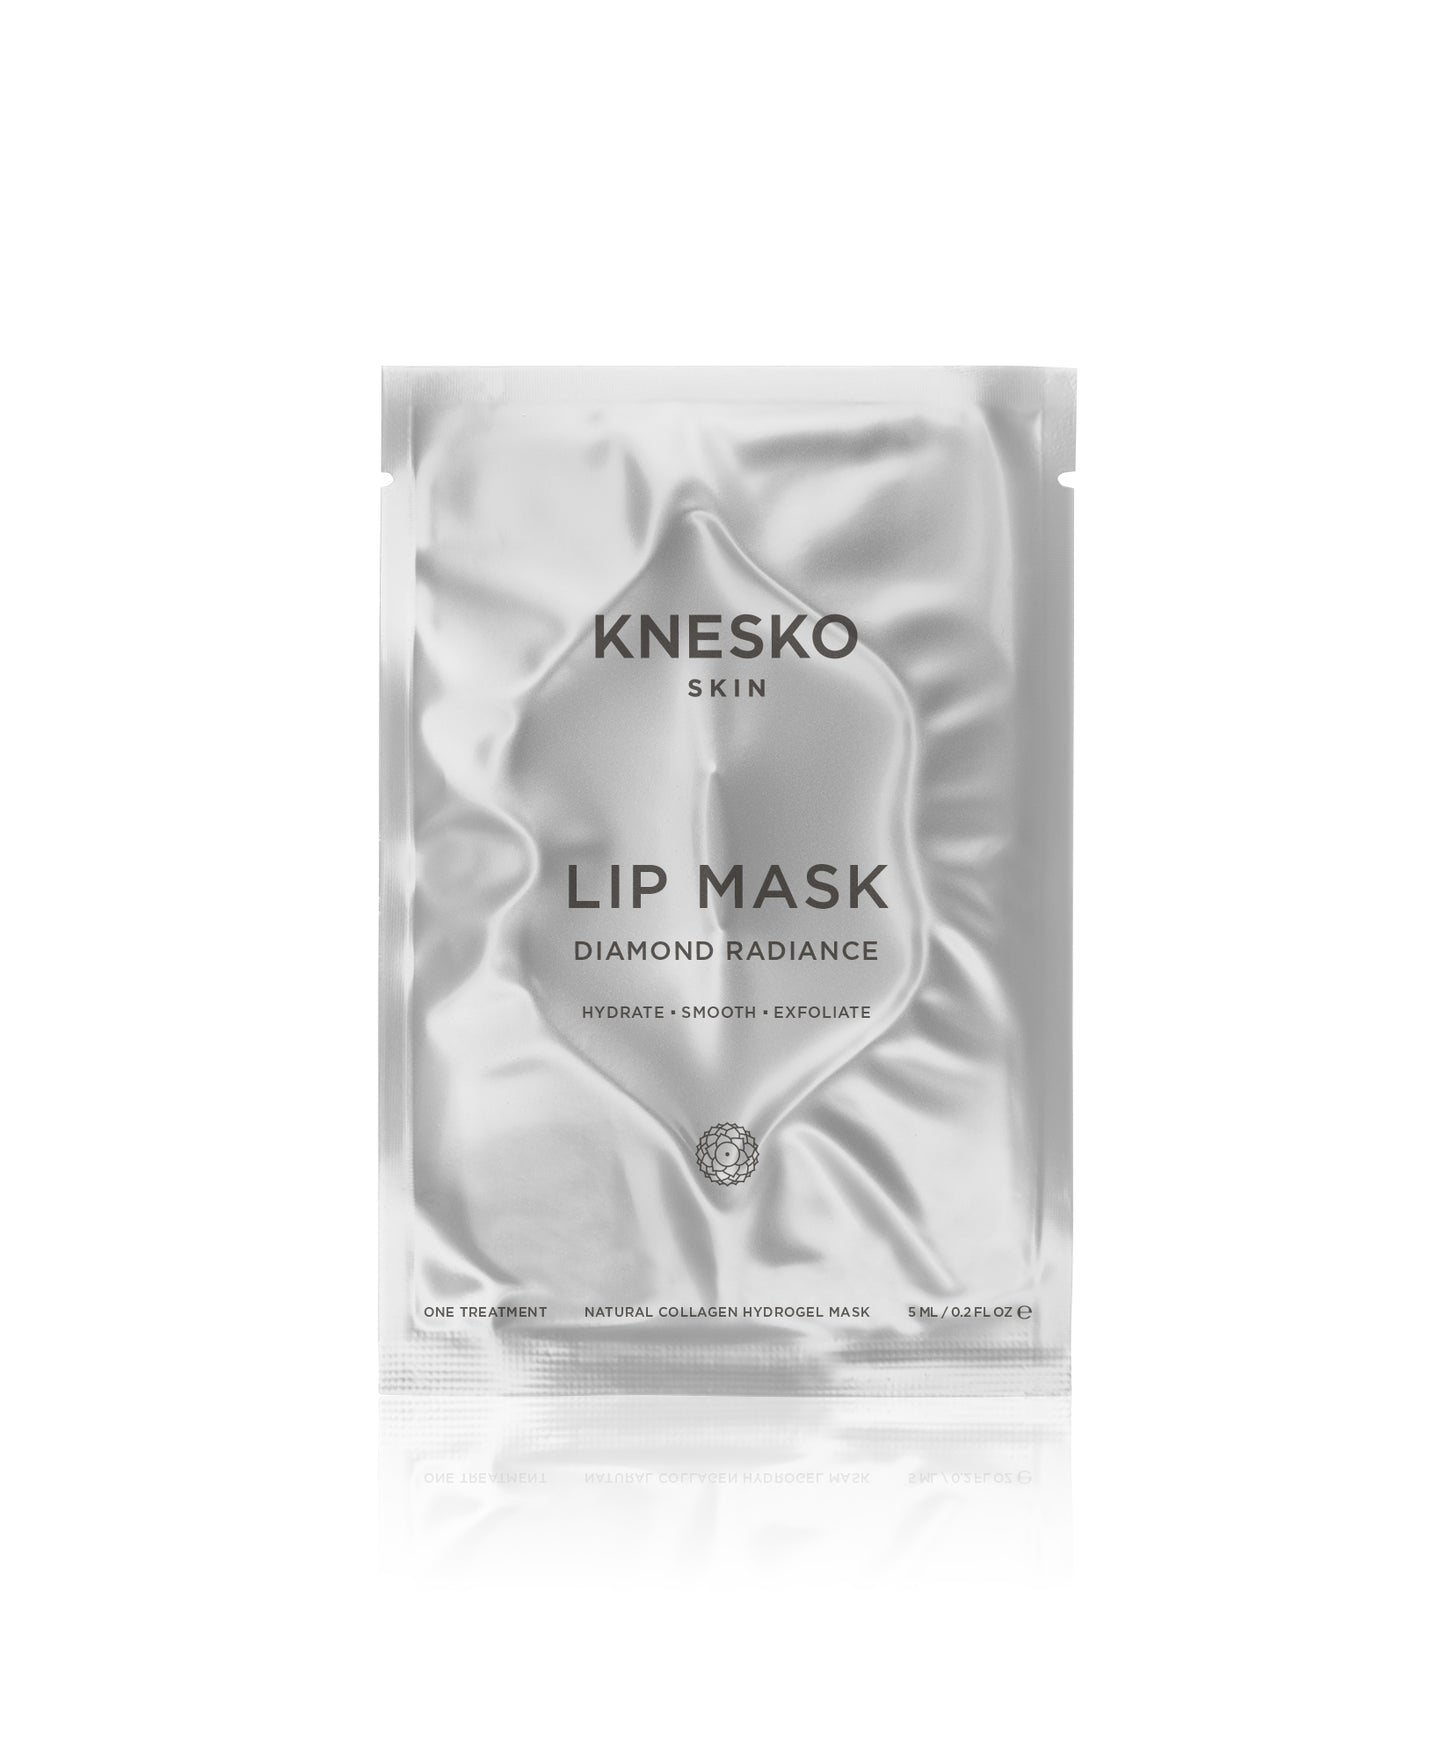 Diamond Radiance Lip Mask packaging.